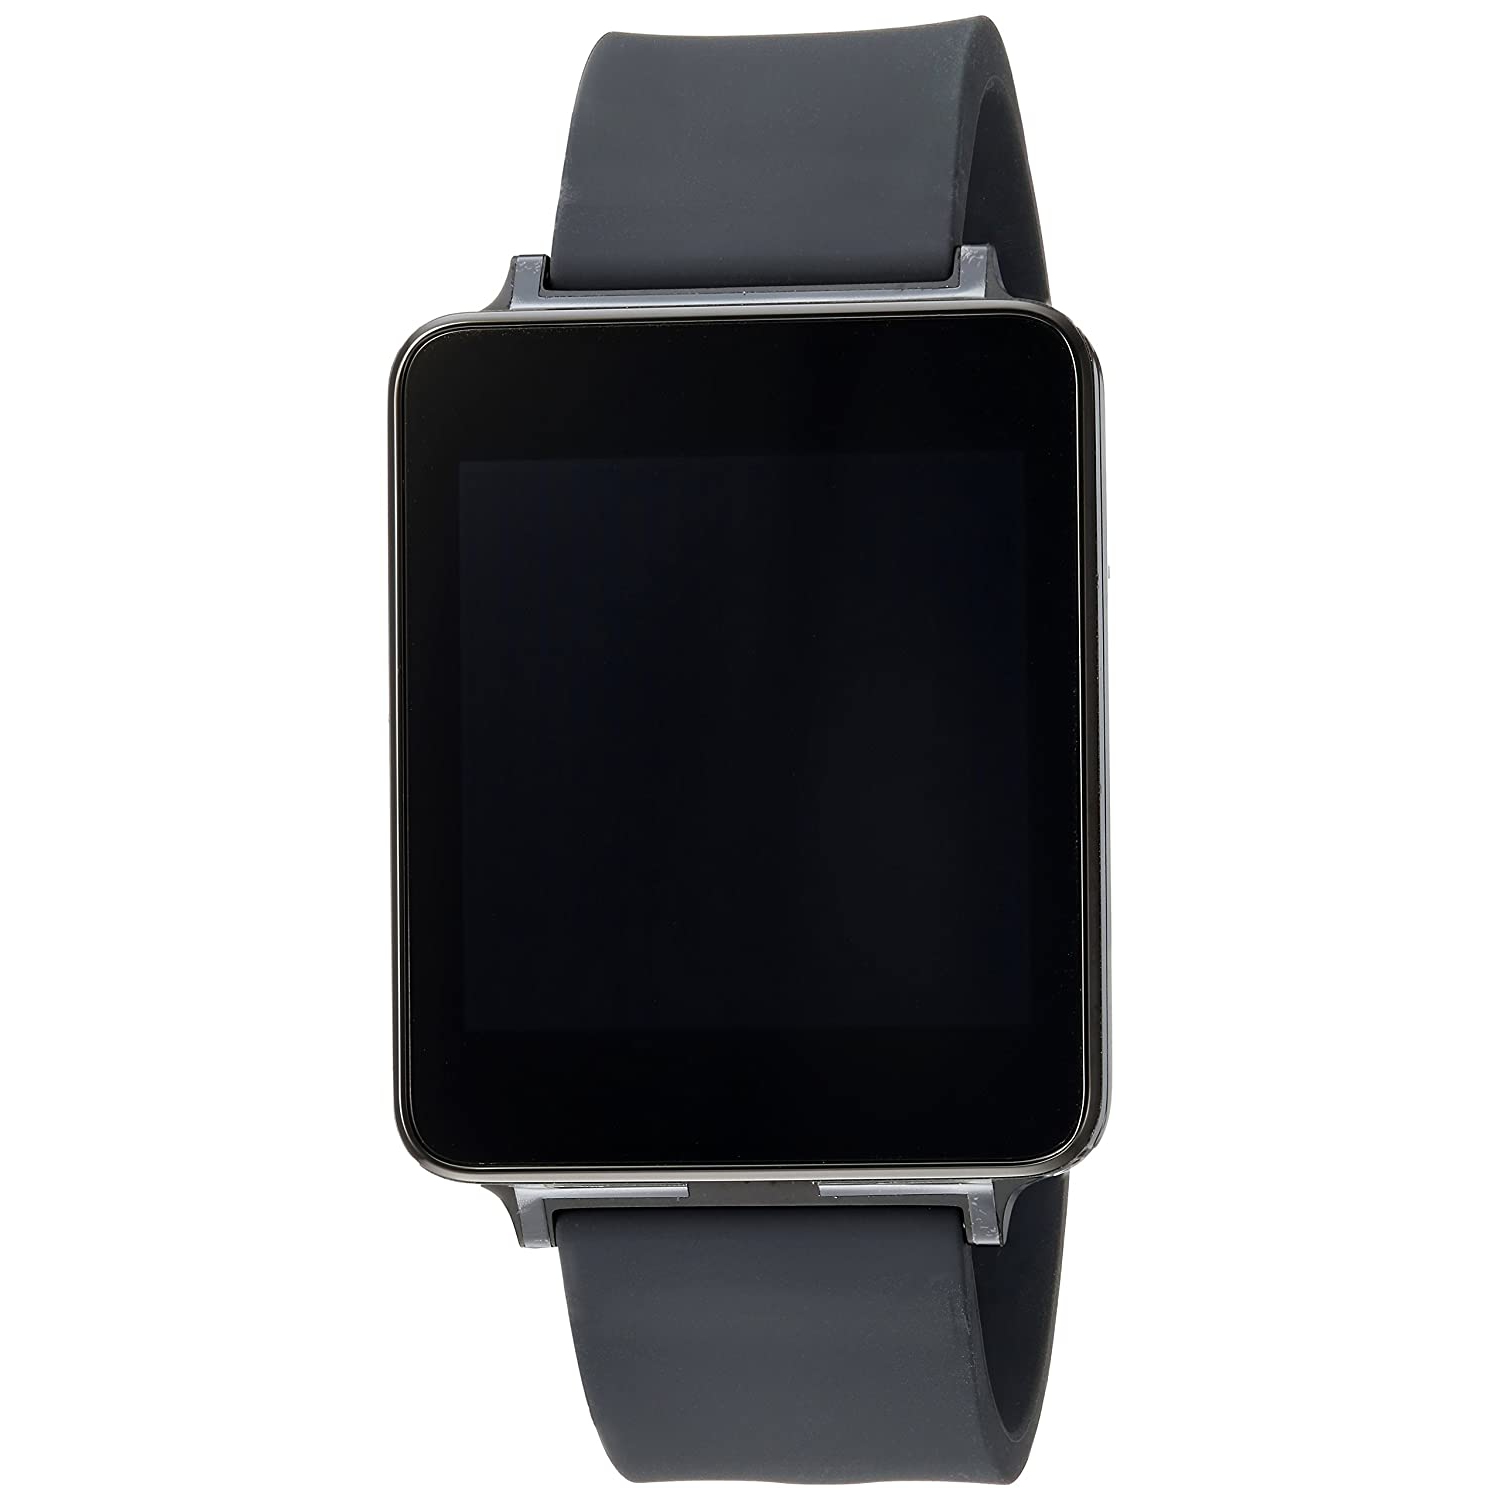 Refurbished (Good) - LG G Watch W100 smartwatch